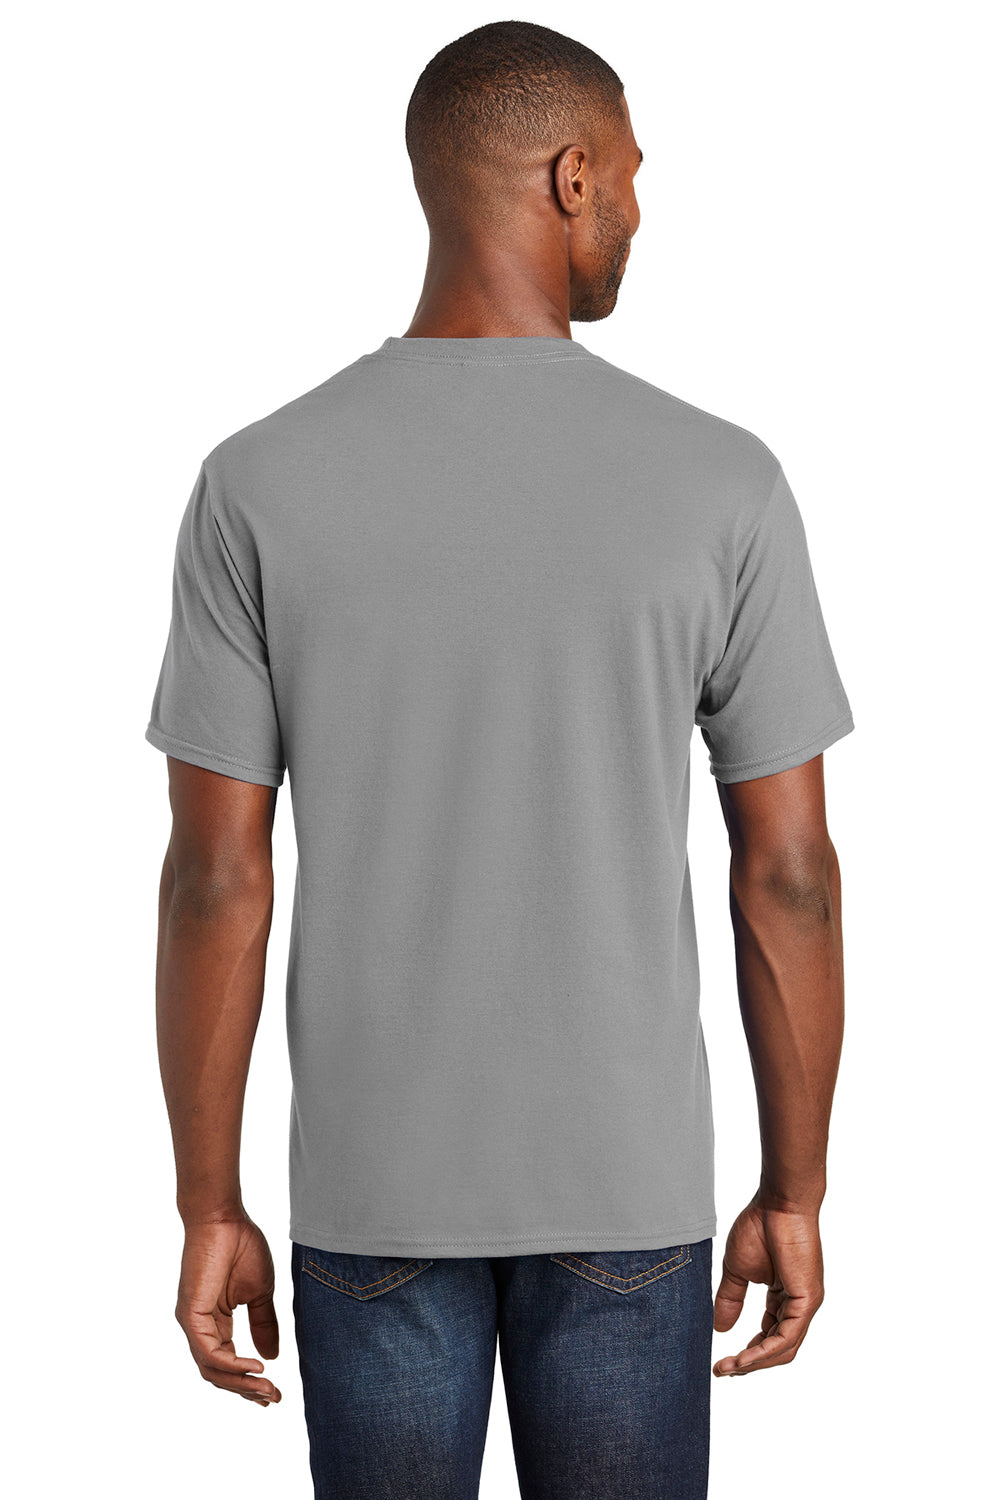 Port & Company PC450 Mens Fan Favorite Short Sleeve Crewneck T-Shirt Medium Grey Back